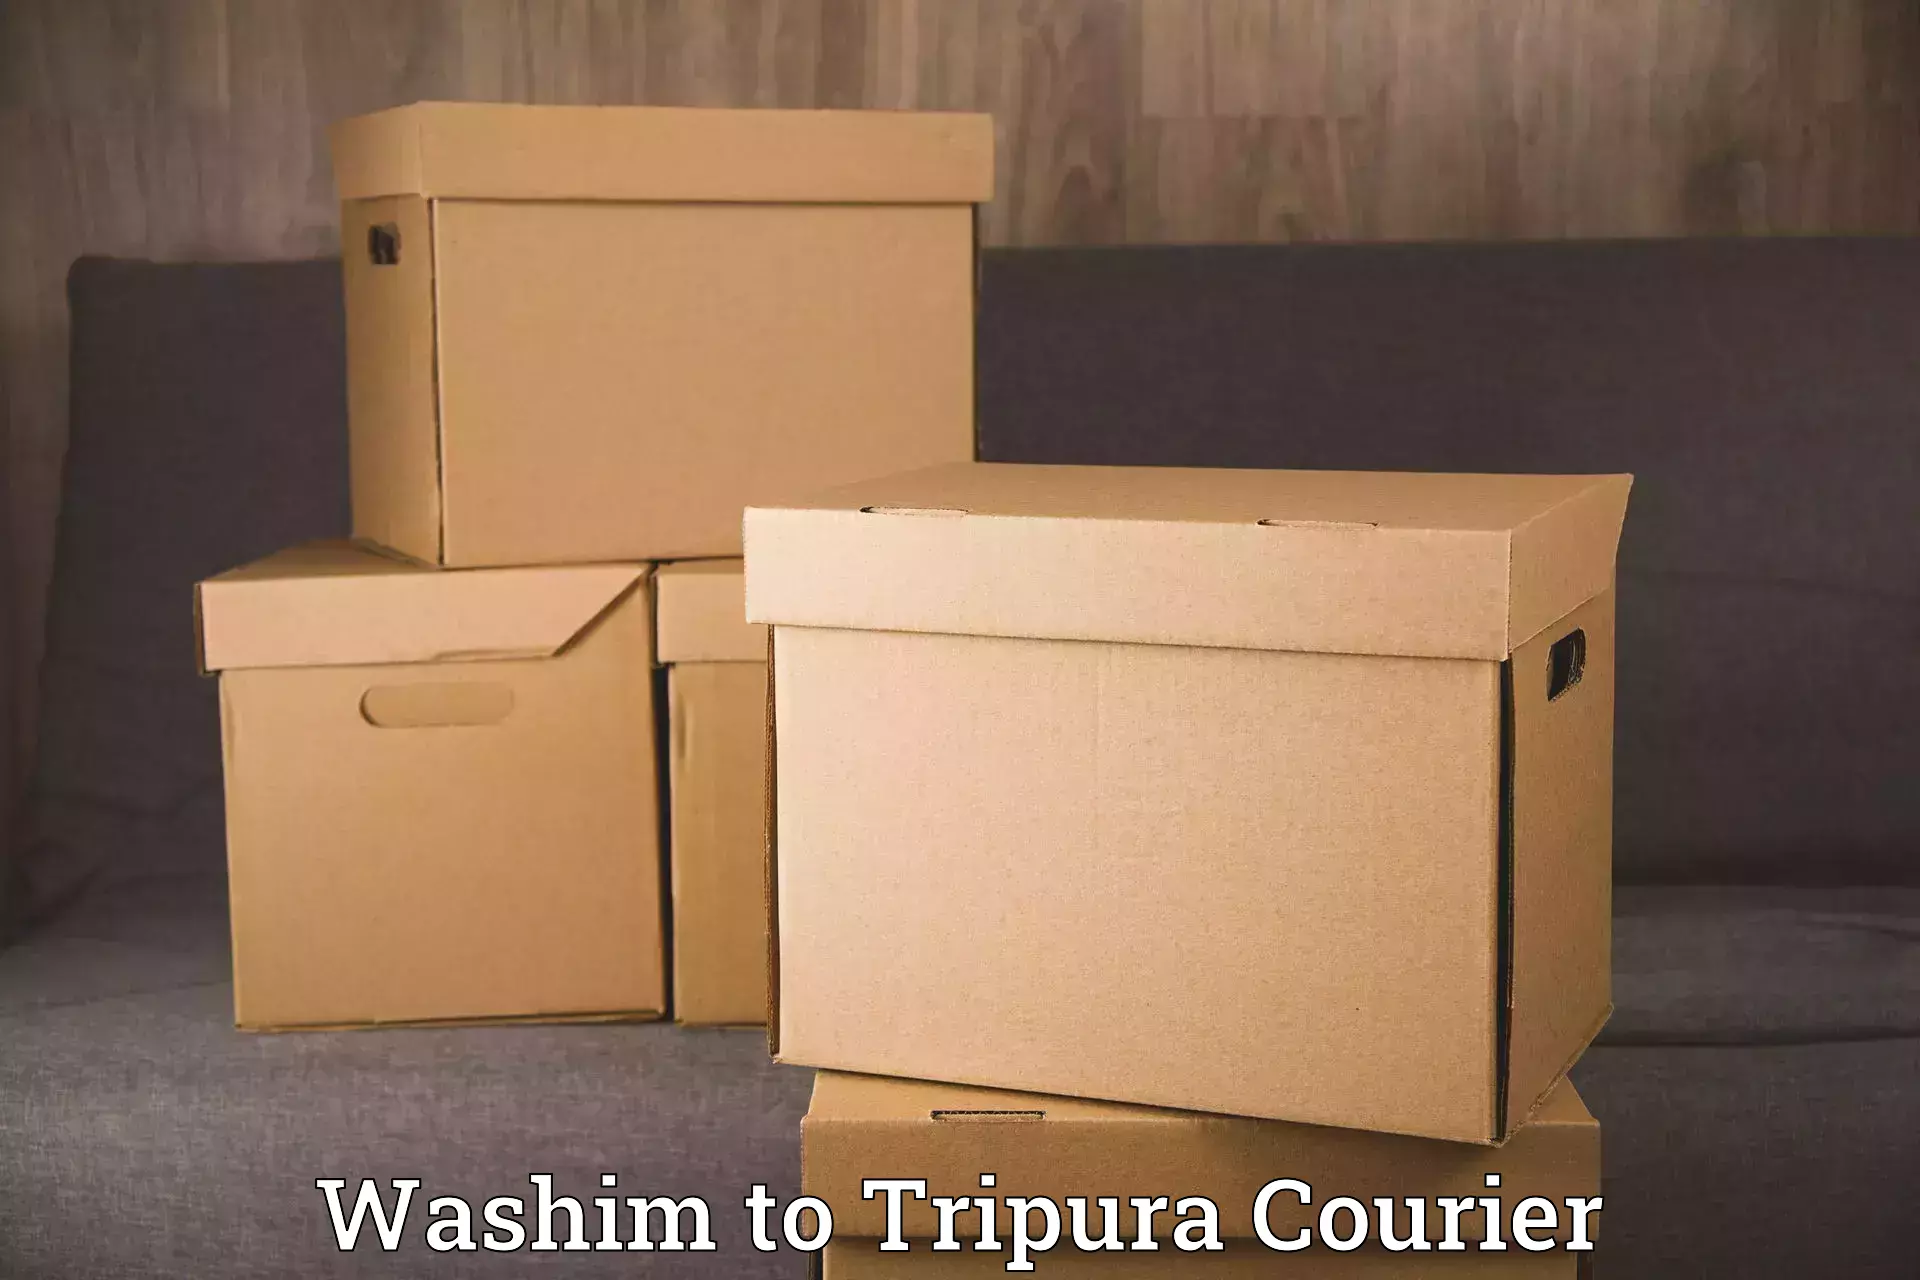 Professional moving company Washim to Tripura